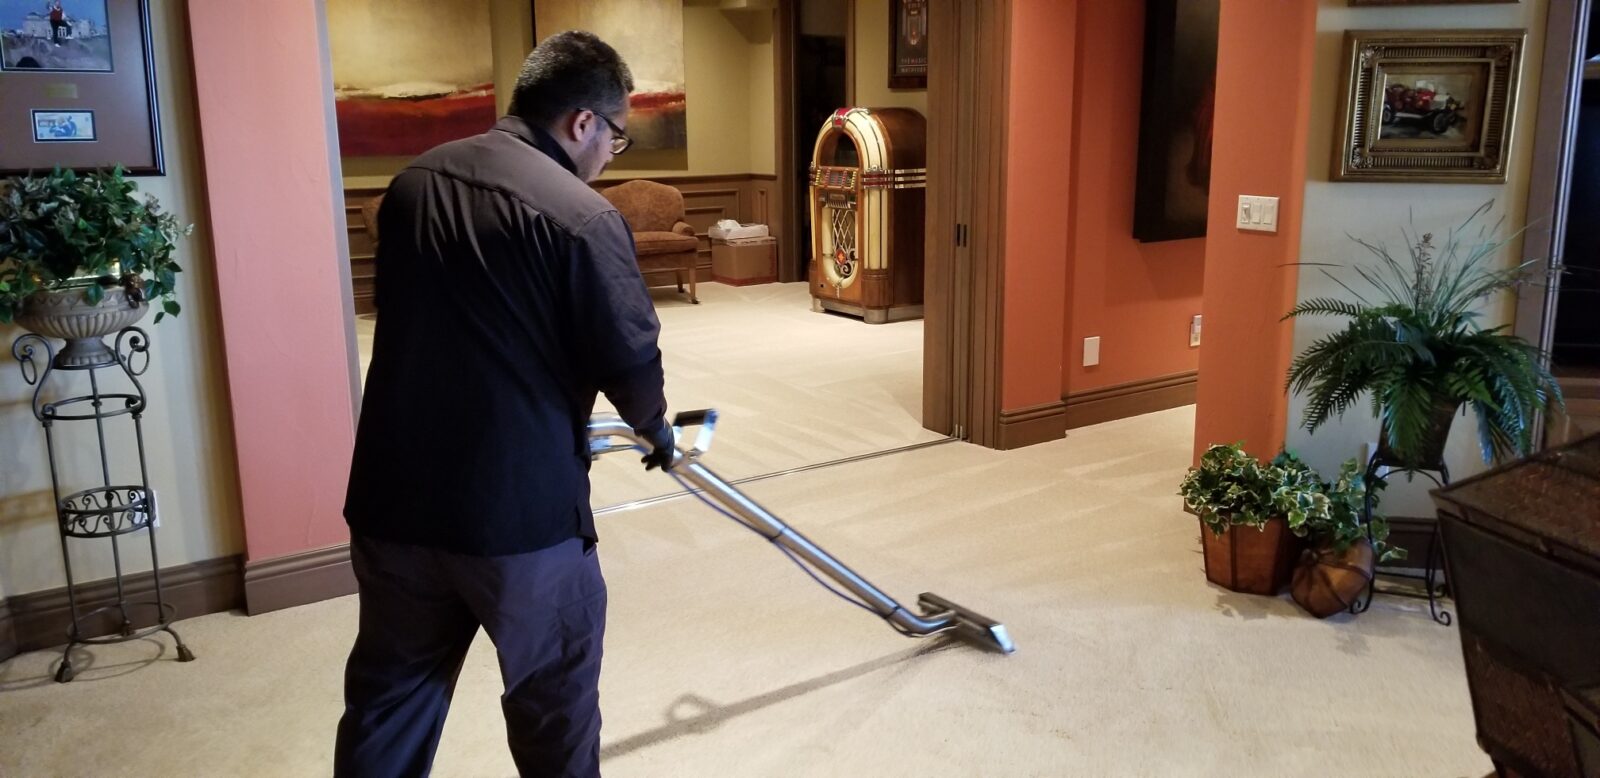 Carpet Cleaning Deals